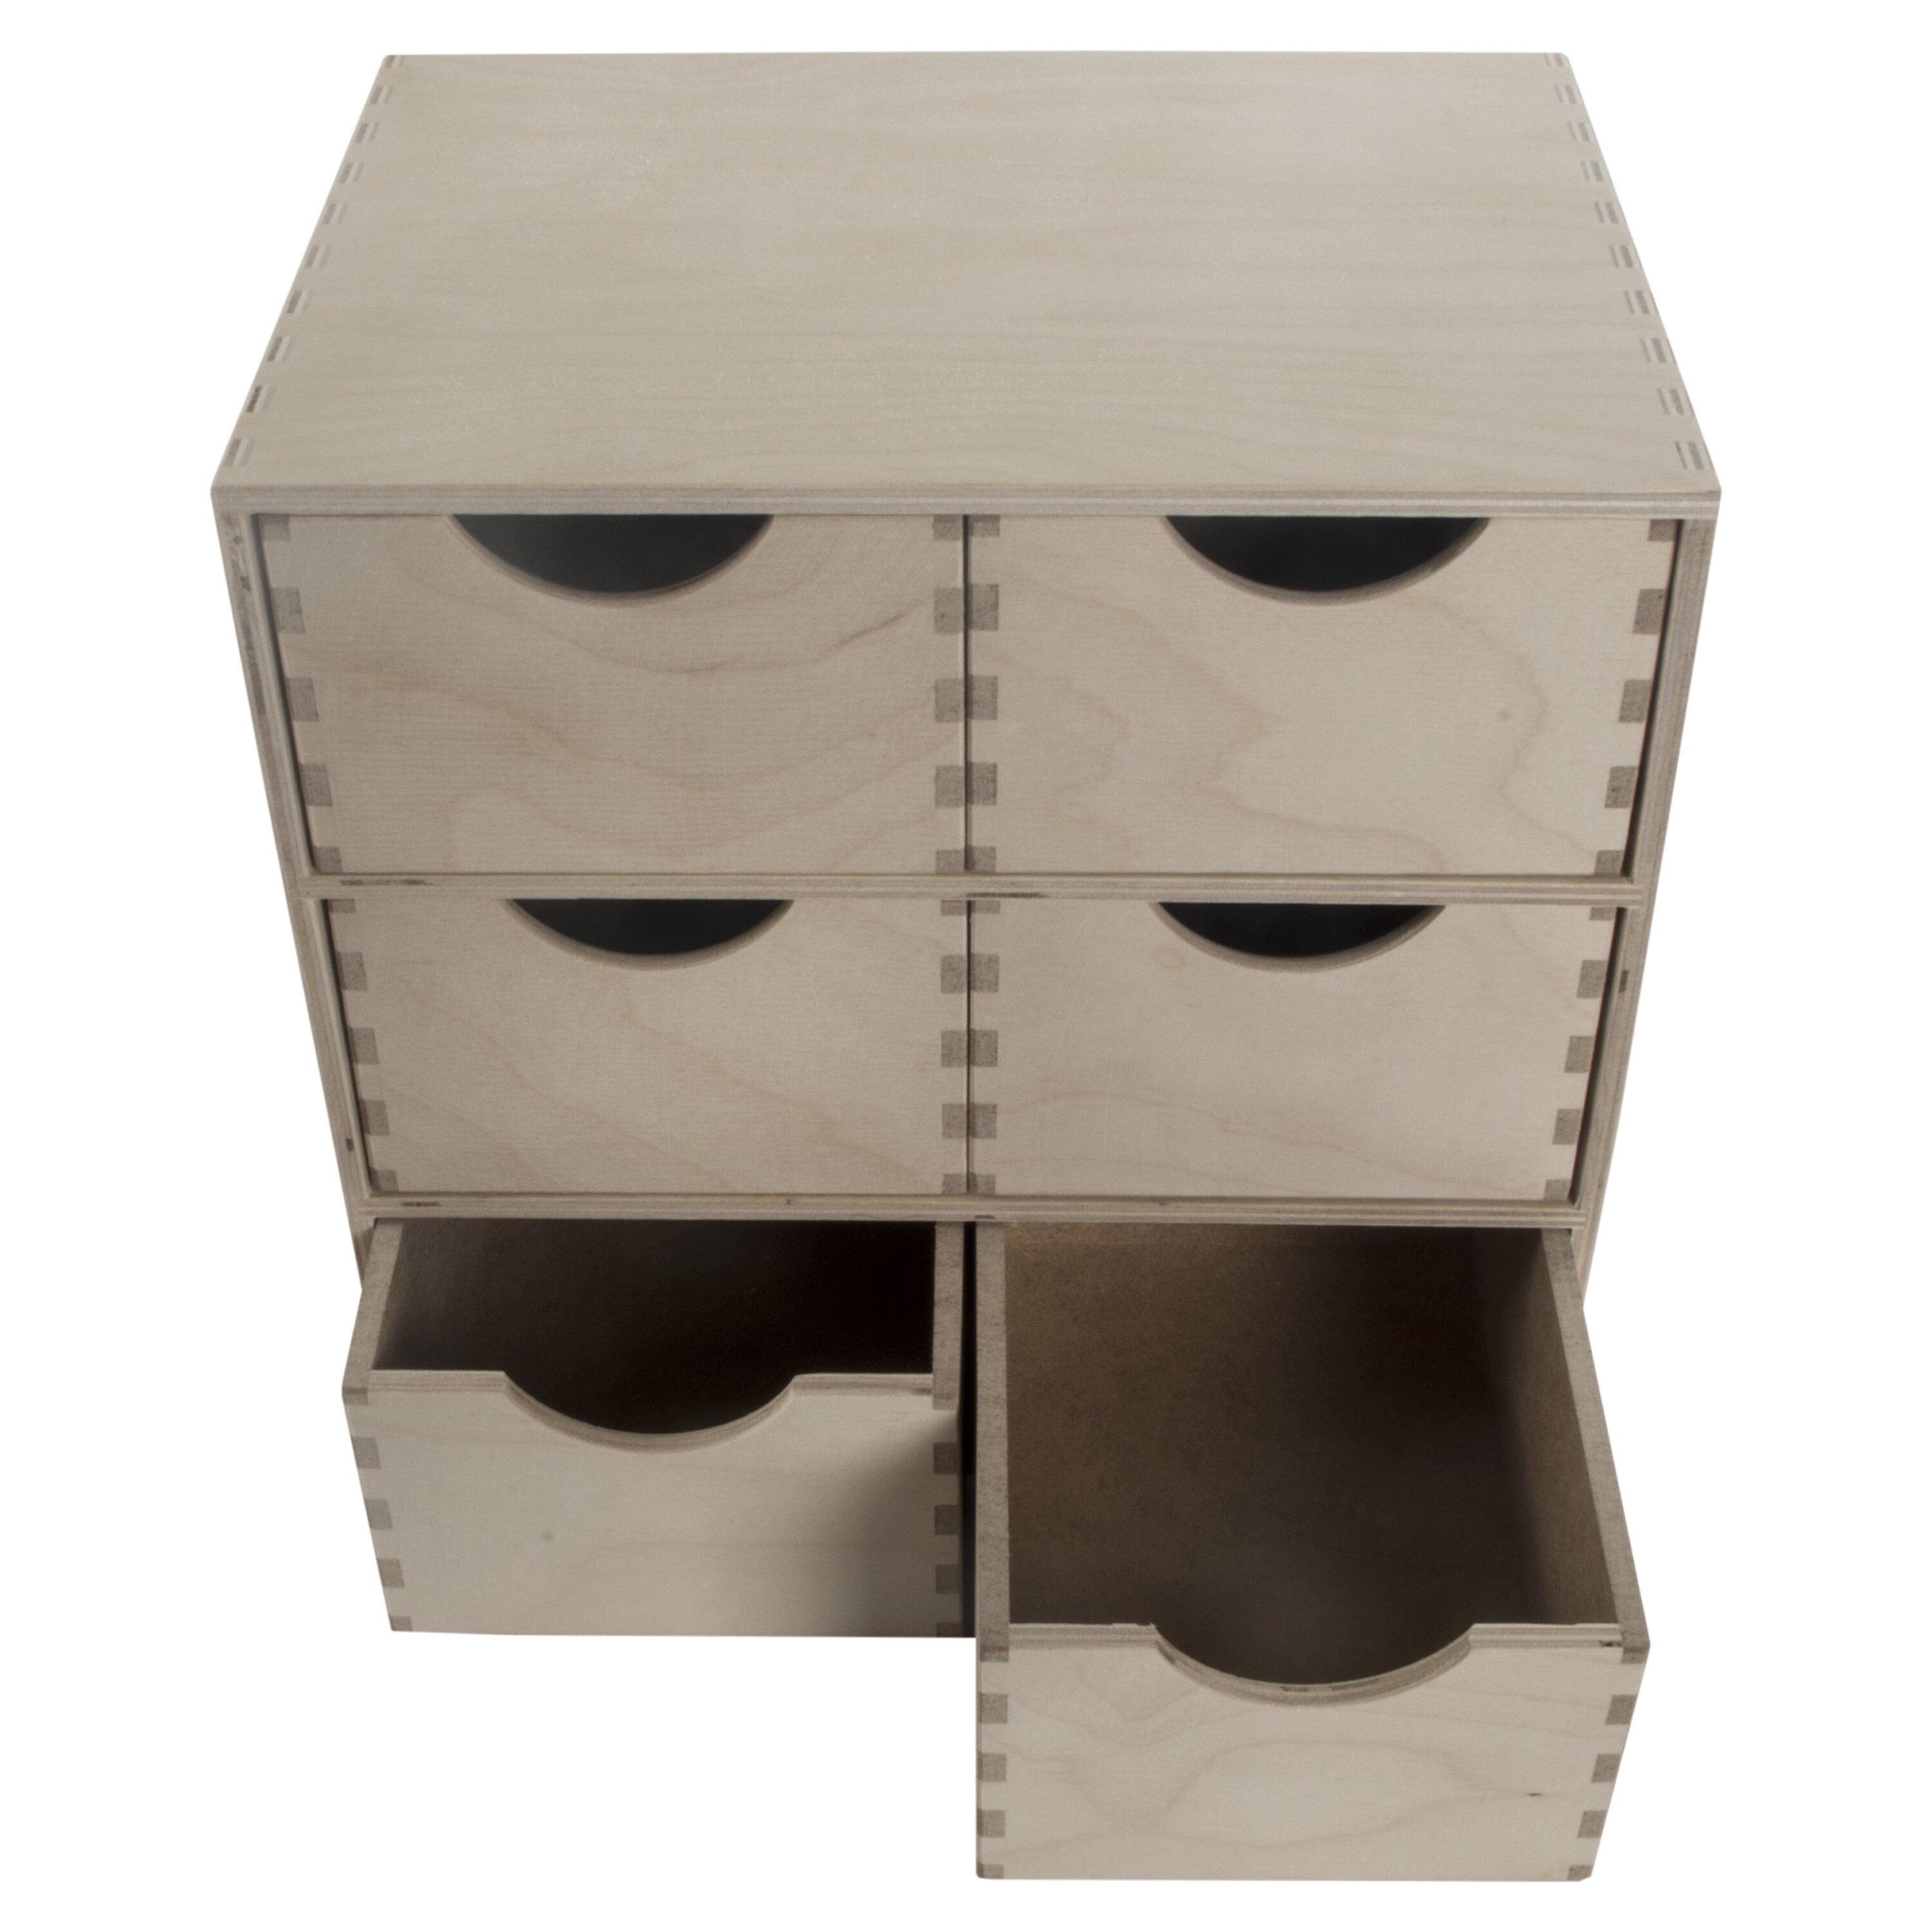 Wooden Mini Chest of 6 Drawers Desktop Organiser Cupboard Cabinet